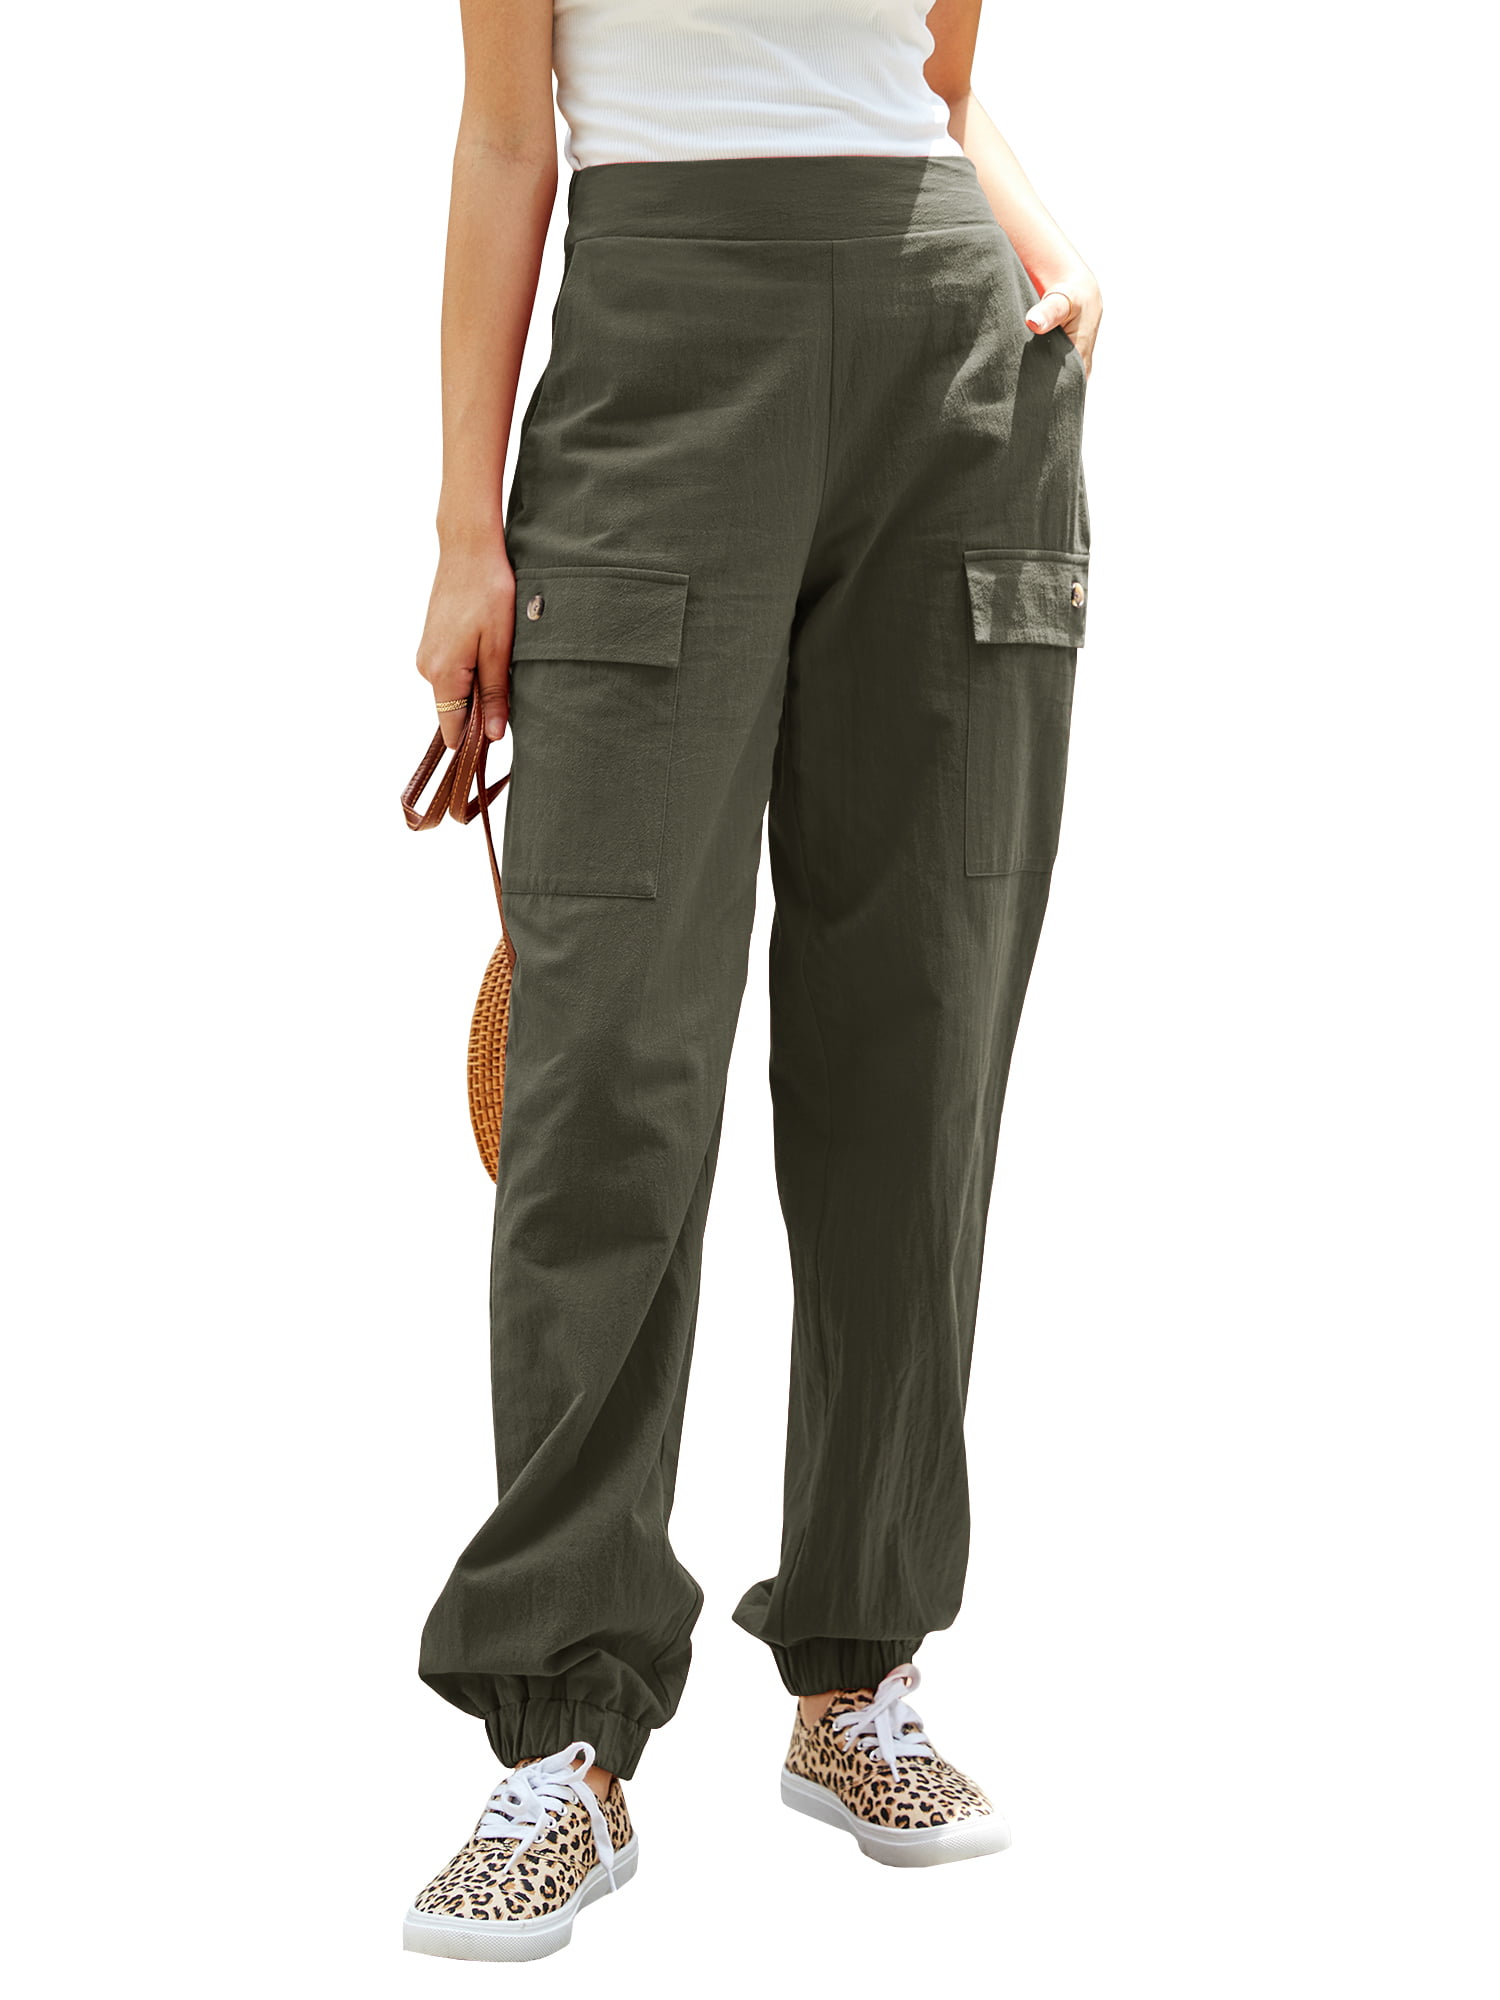 SySea - Womens Cargo Joggers Pants High Elastic Waisted Casual Pants ...